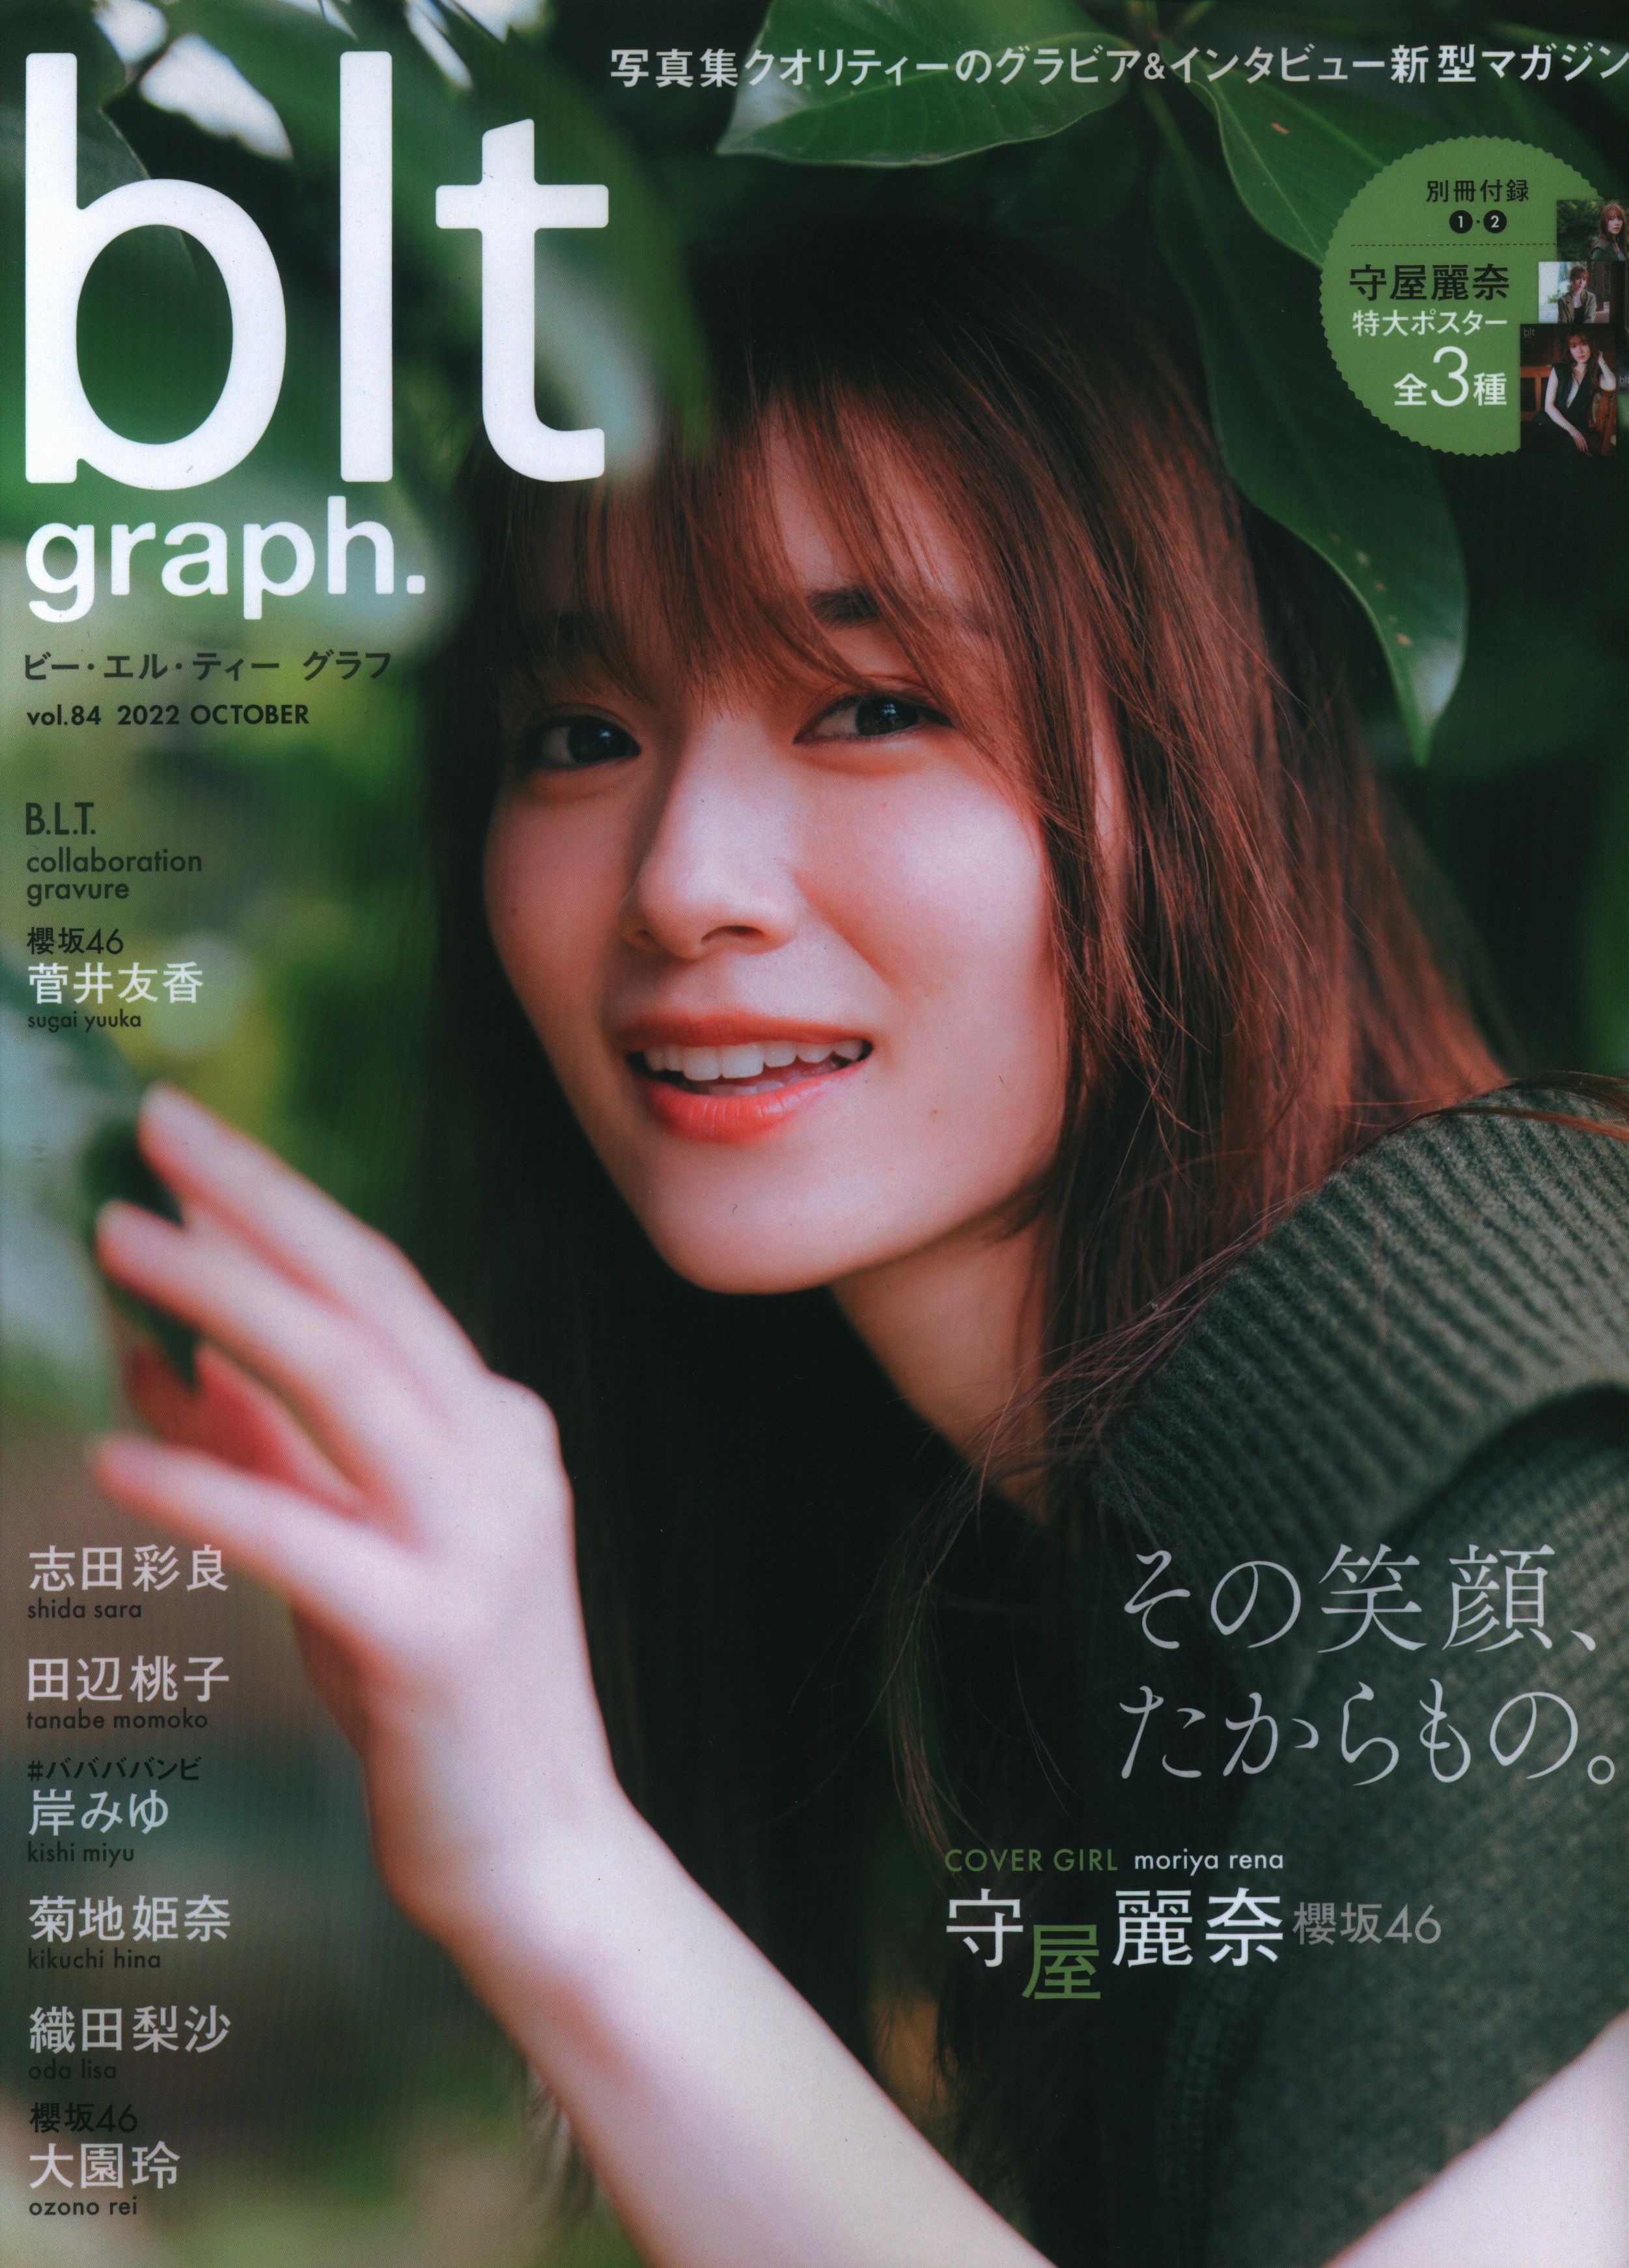 Tokyo News Service Sakurazaka 46 Rena Moriya Blt Graph Bl T Graph October 22 Edition 84 Mandarake Online Shop